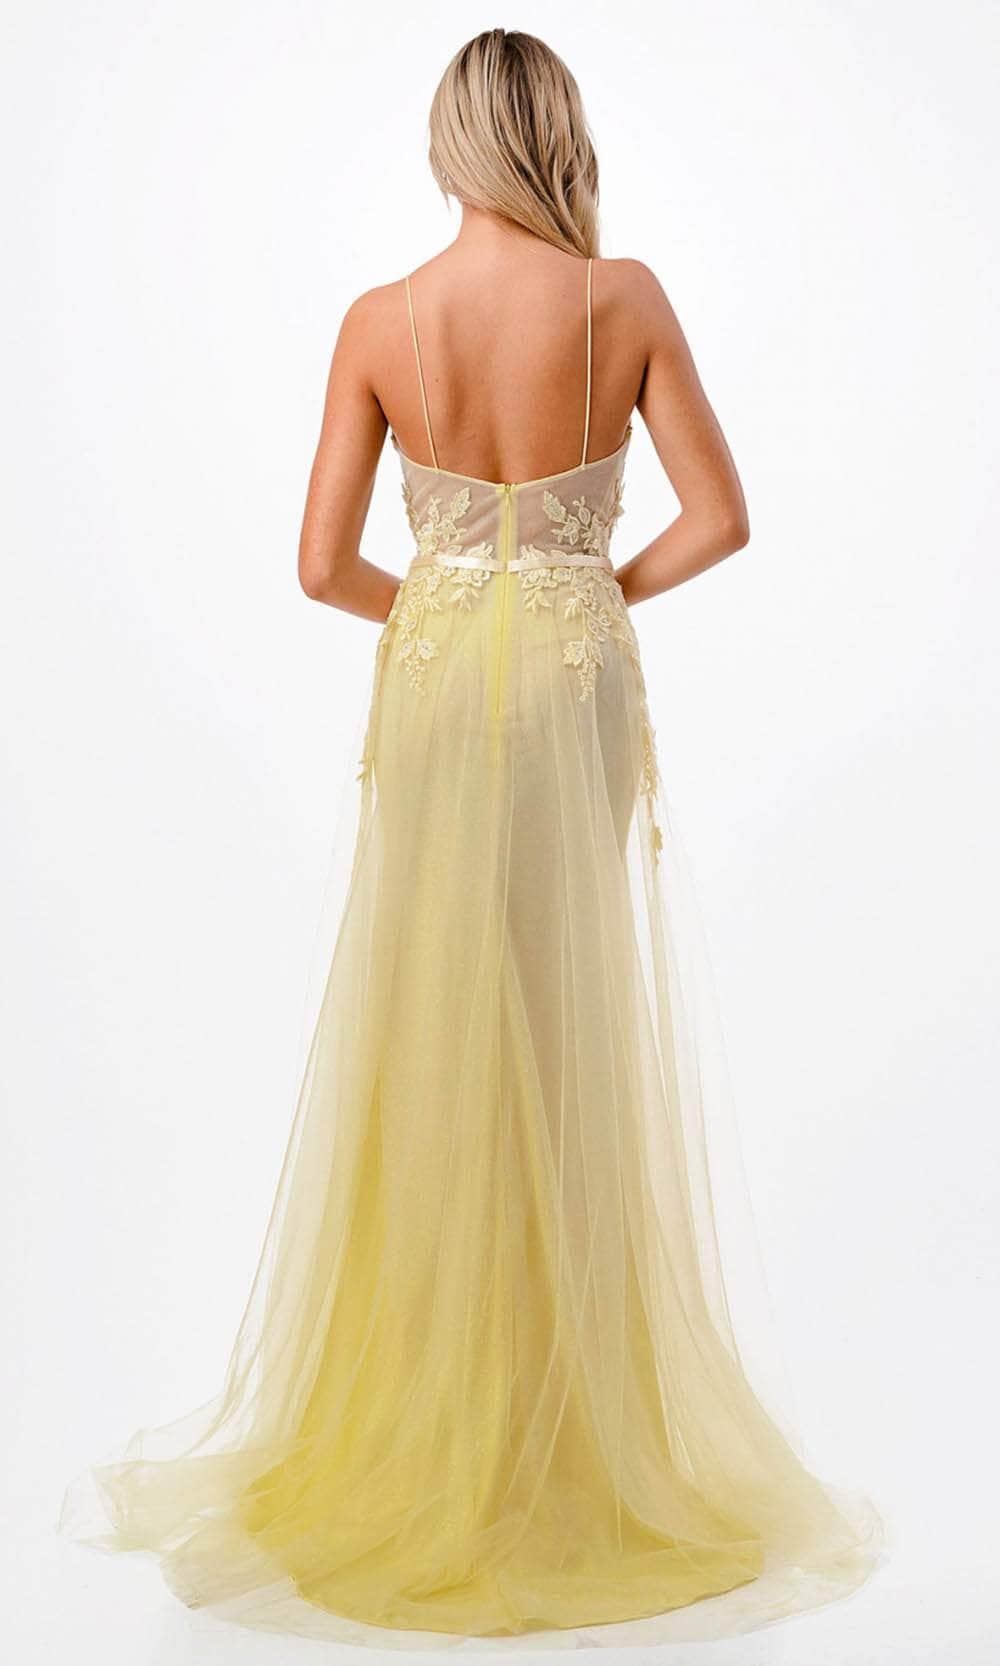 Aspeed Design P2110 - Embellished Prom Dress